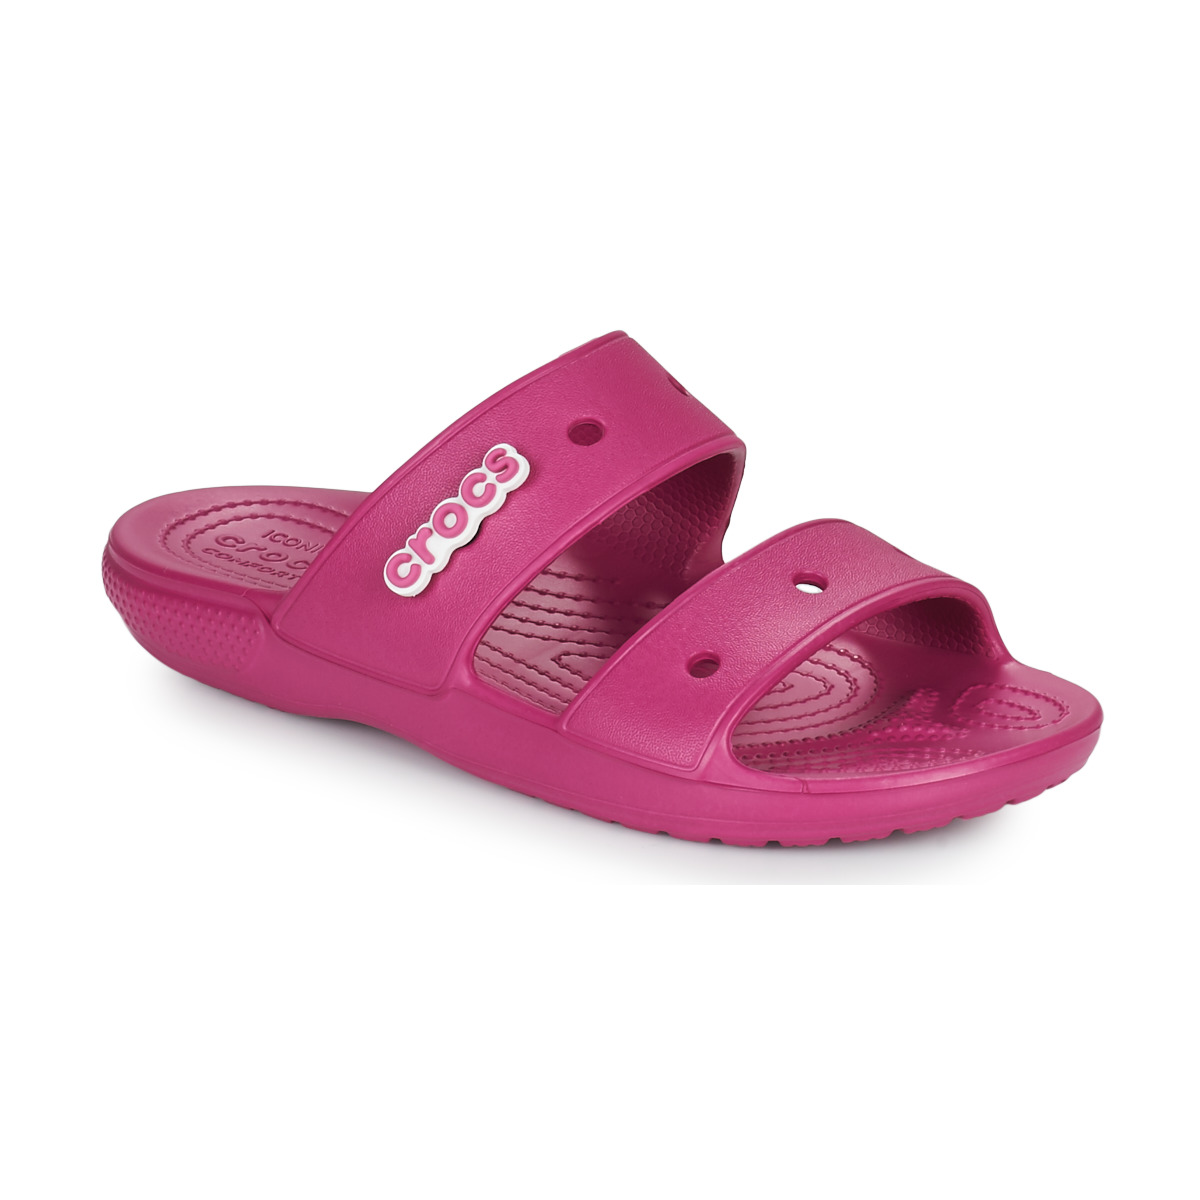 Zapatos Mujer Zuecos (Mules) Crocs CLASSIC CROCS SANDAL Rosa